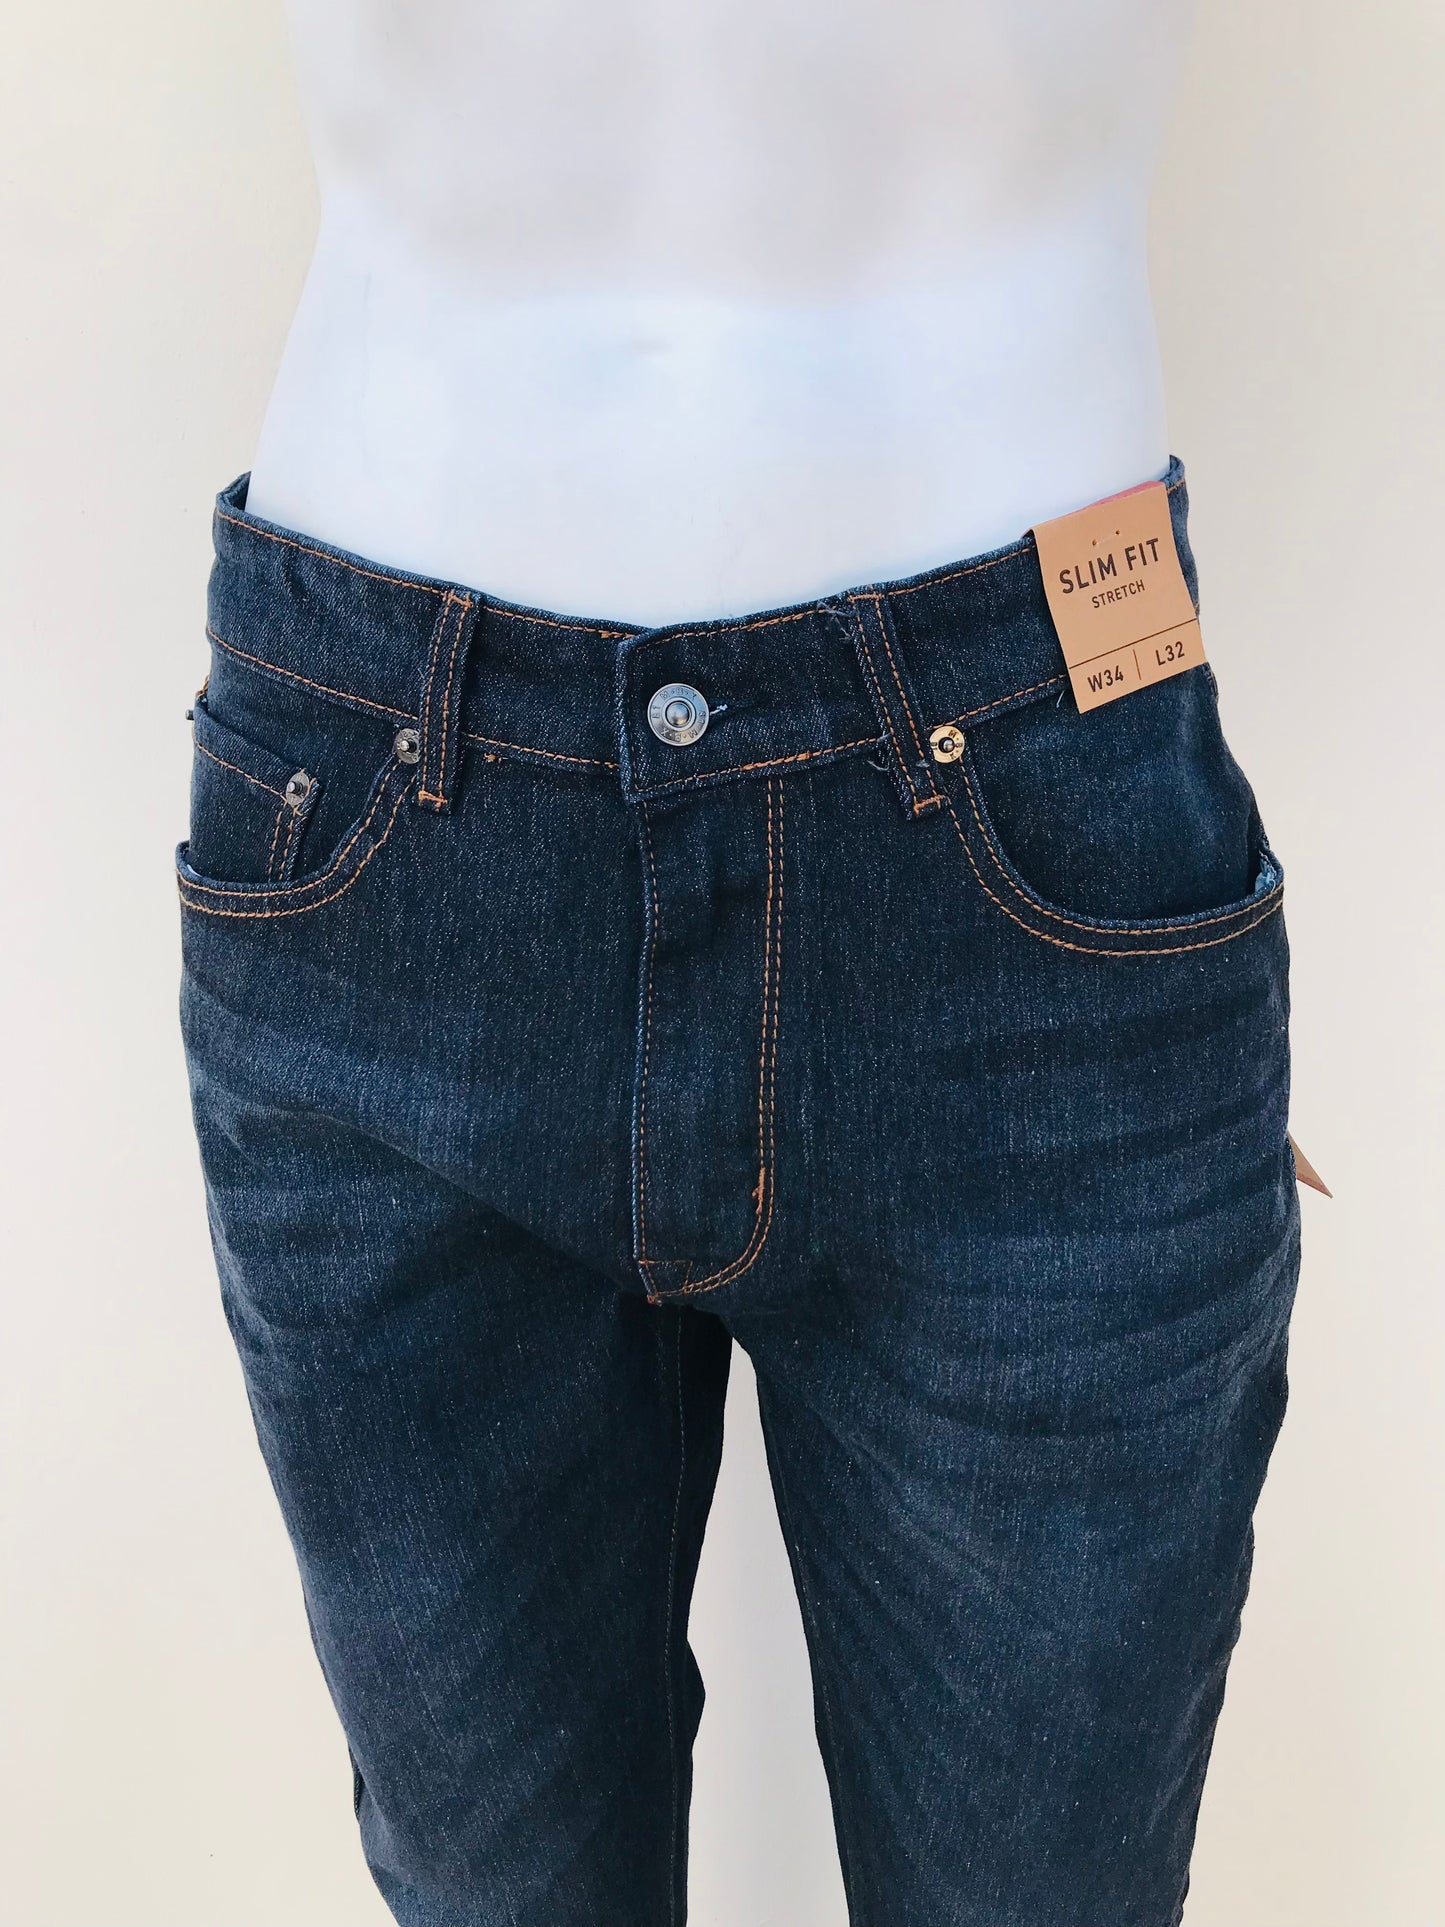 Pantalón jeans M B X original, azul marino oscuro liso.